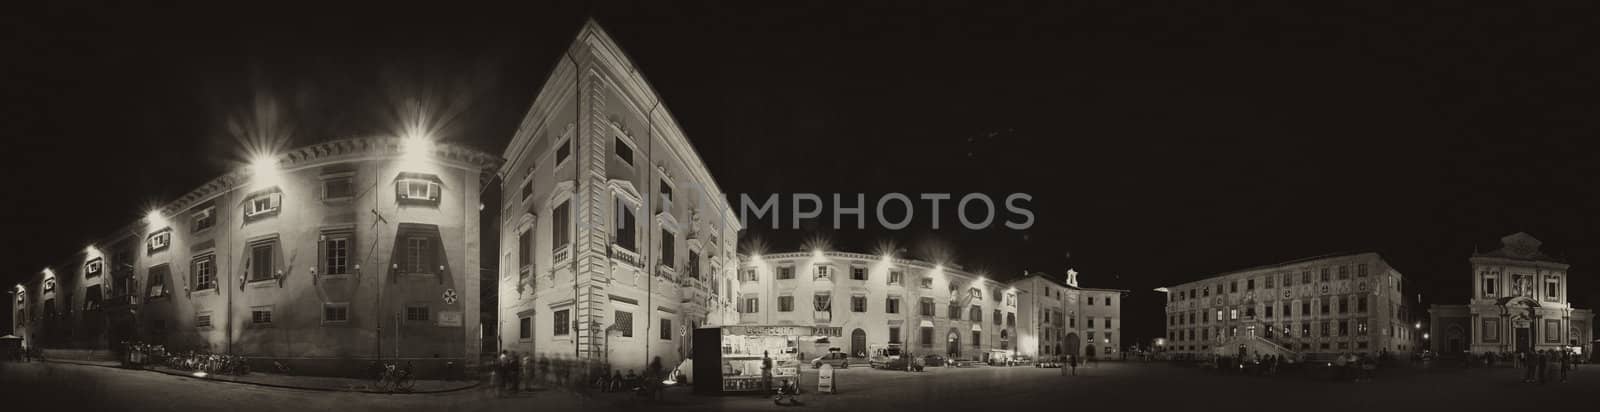 Night View of Famous Piazza dei Cavalieri in Pisa, Italy